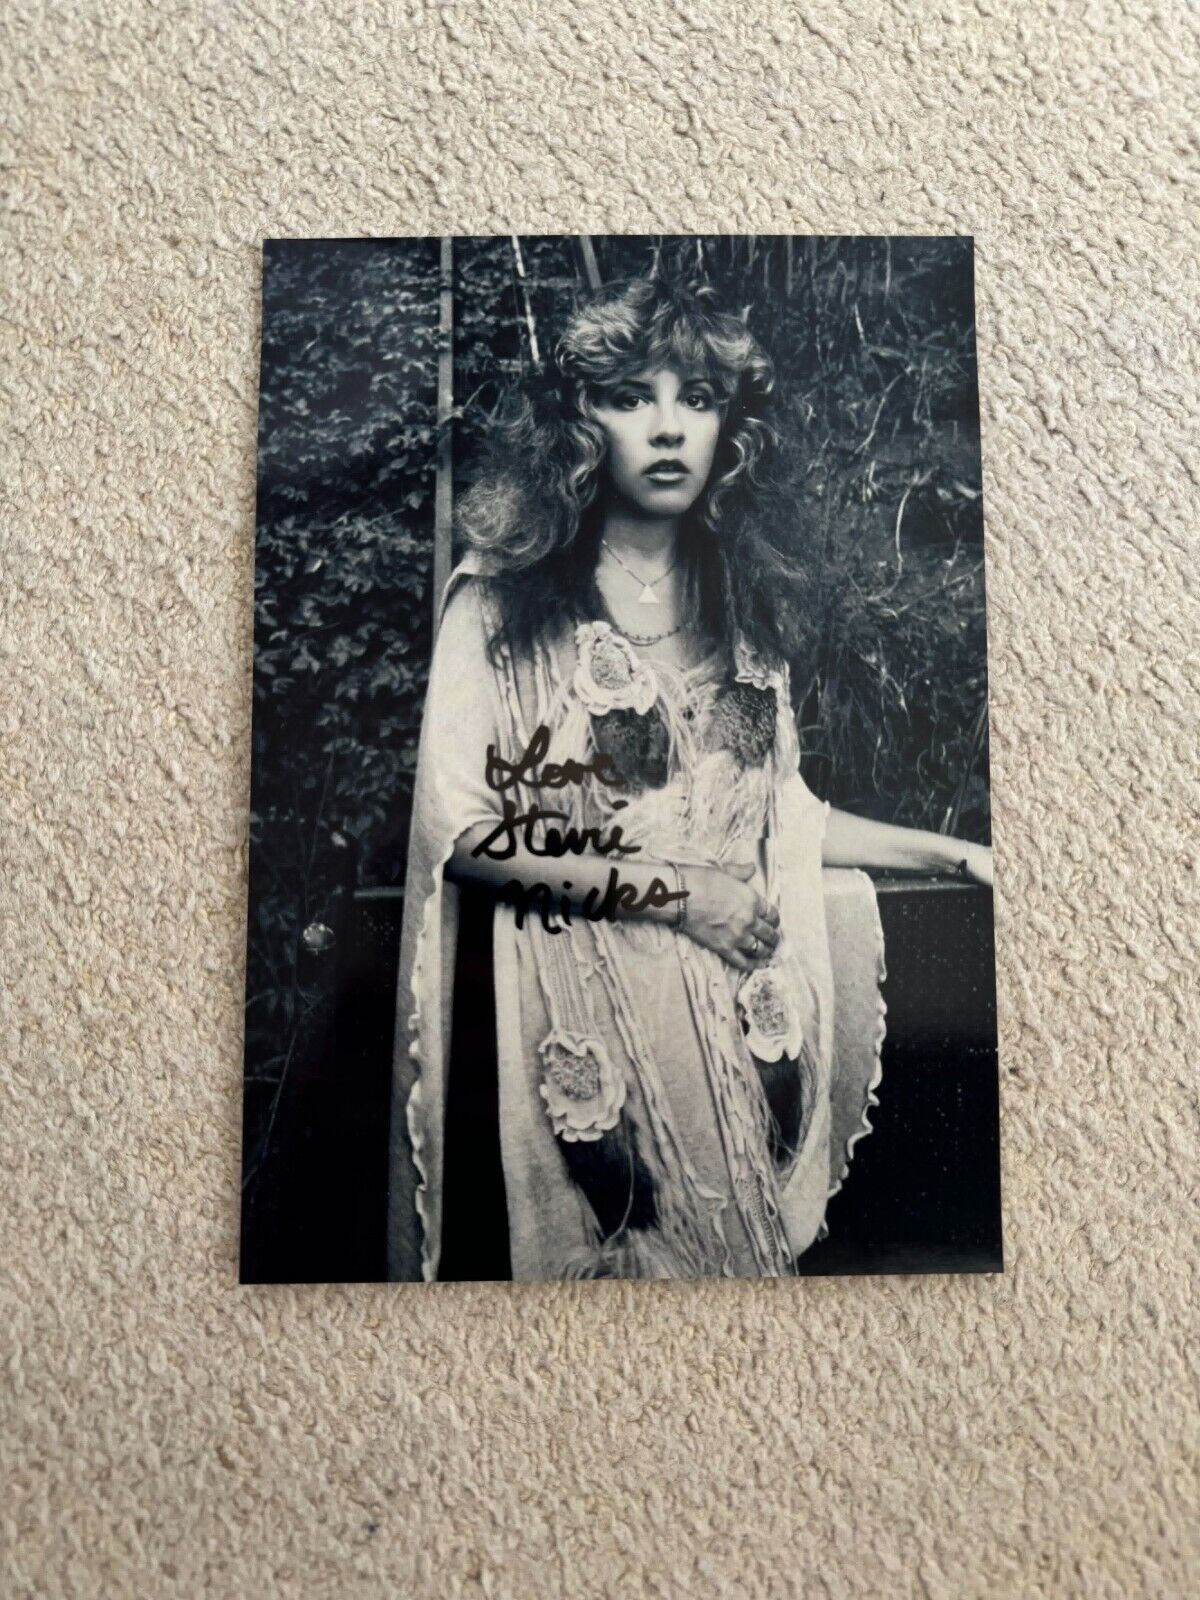 Stevie Nicks Fleetwood Mac signed autographed photo coa 6x8 inch